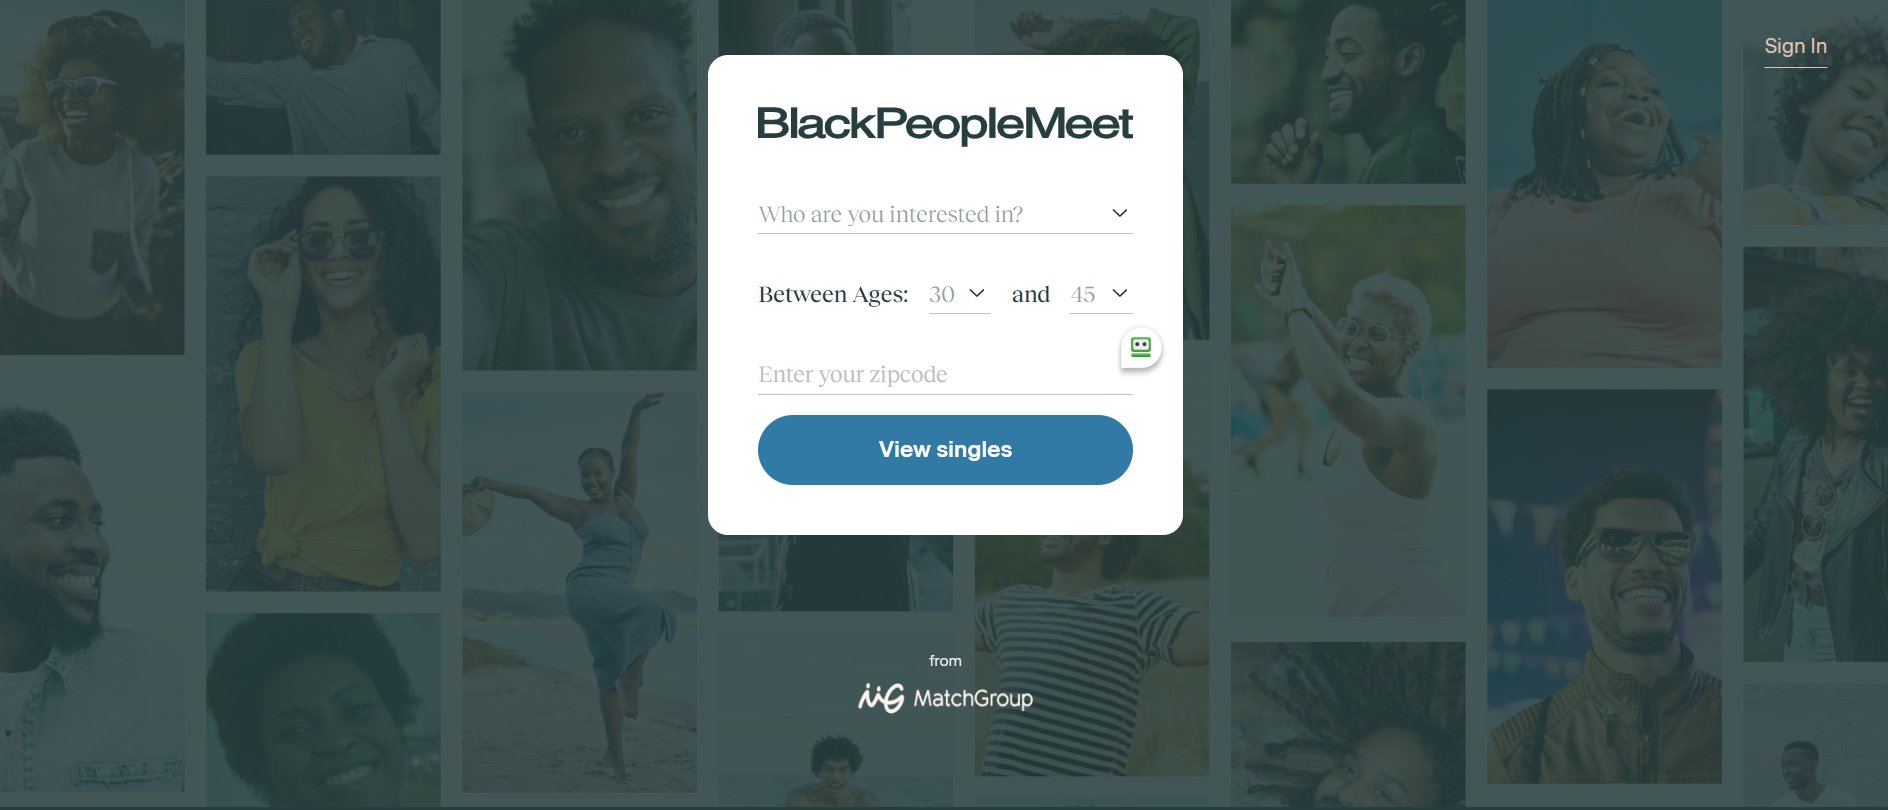 Black People Meet Christian Dating Site